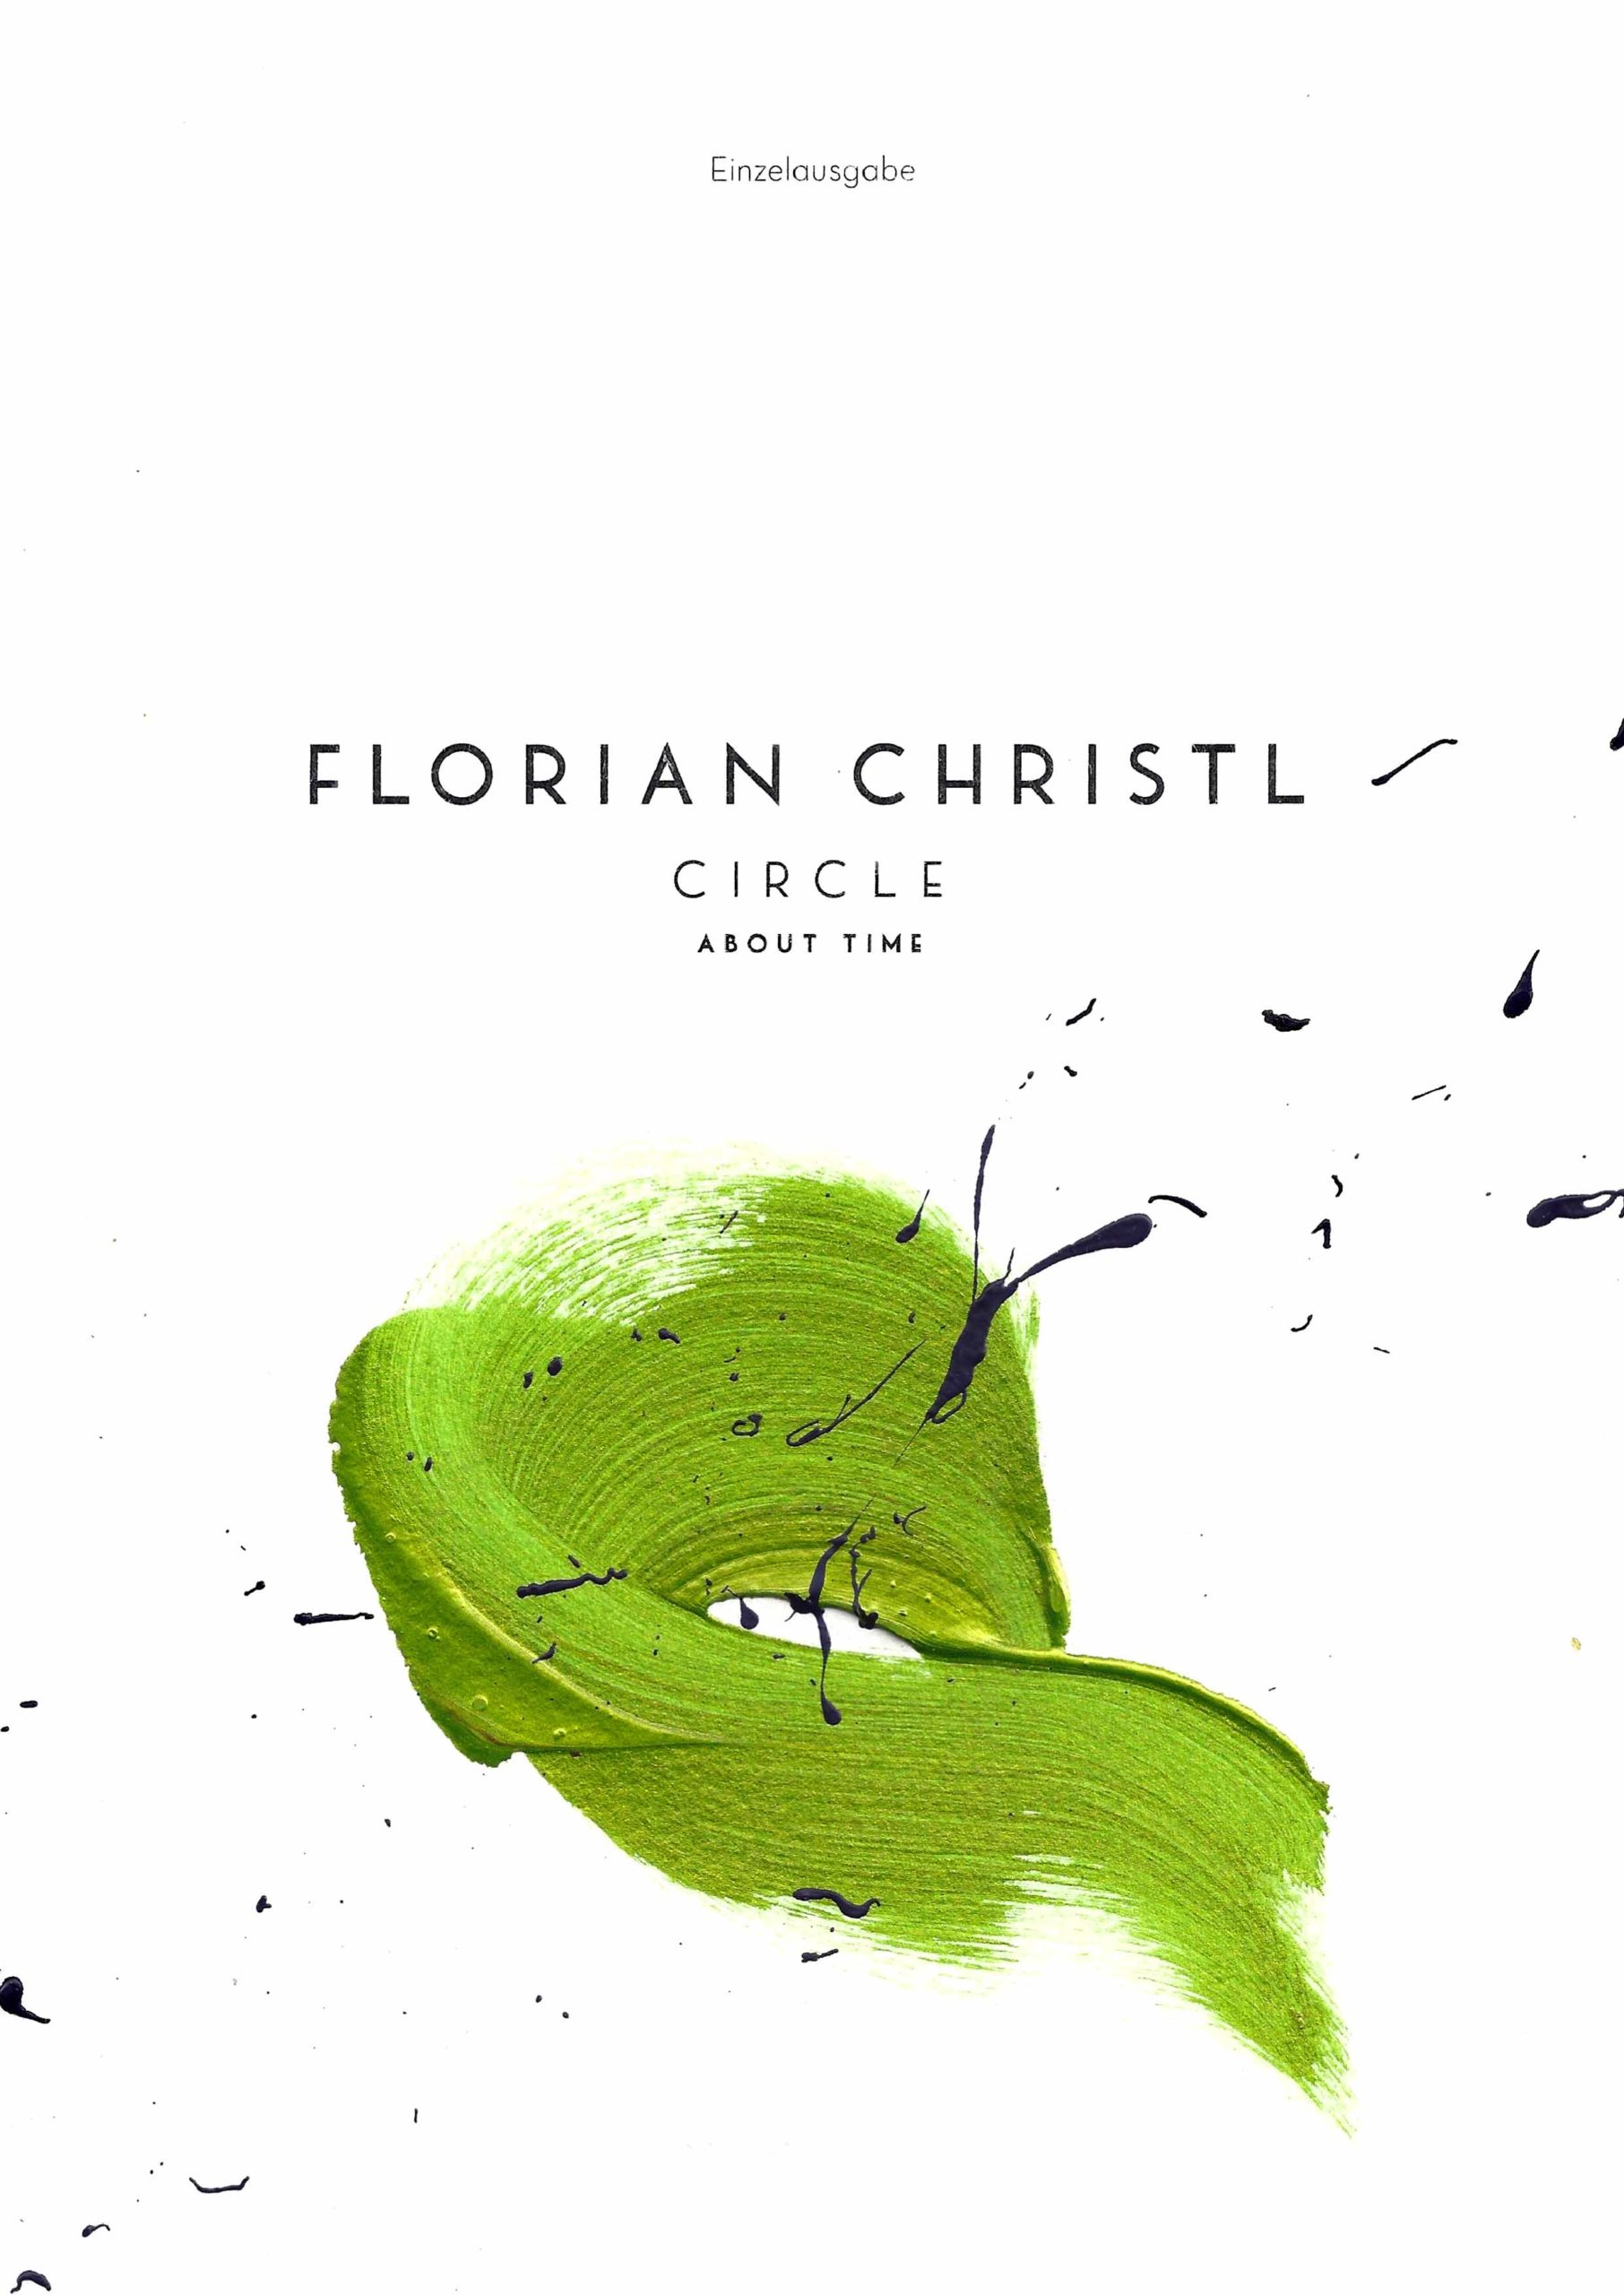 01_Piano Sheet Music_Florian Christl_Circle